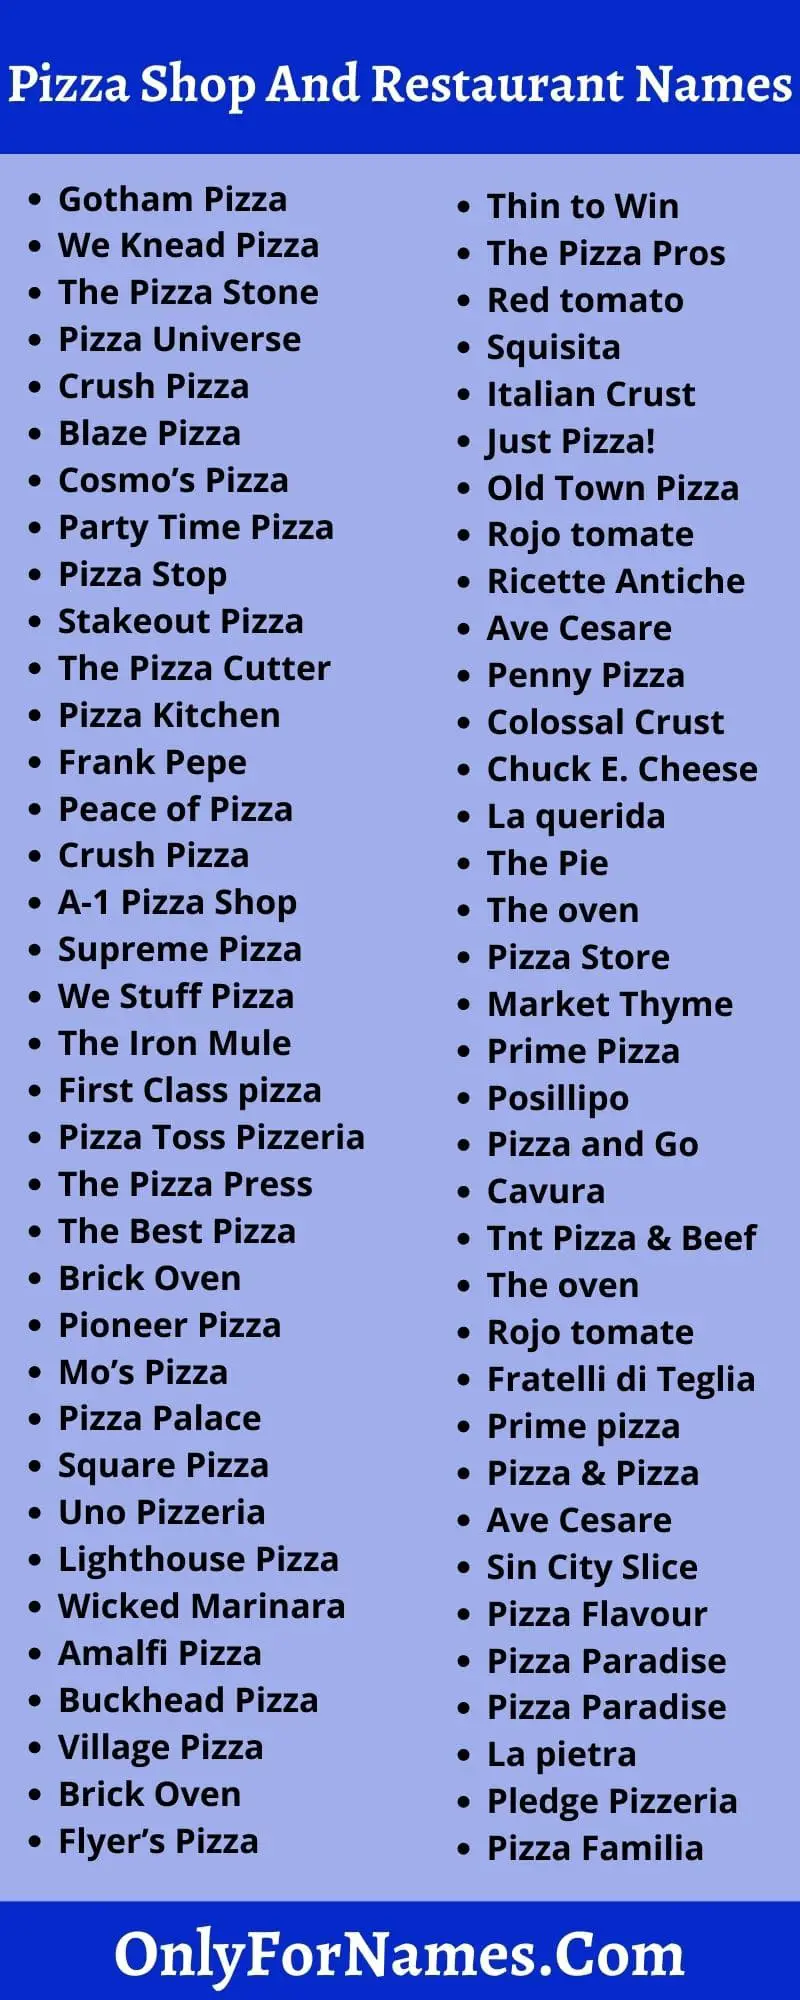 Pizza Shop And Restaurant Names